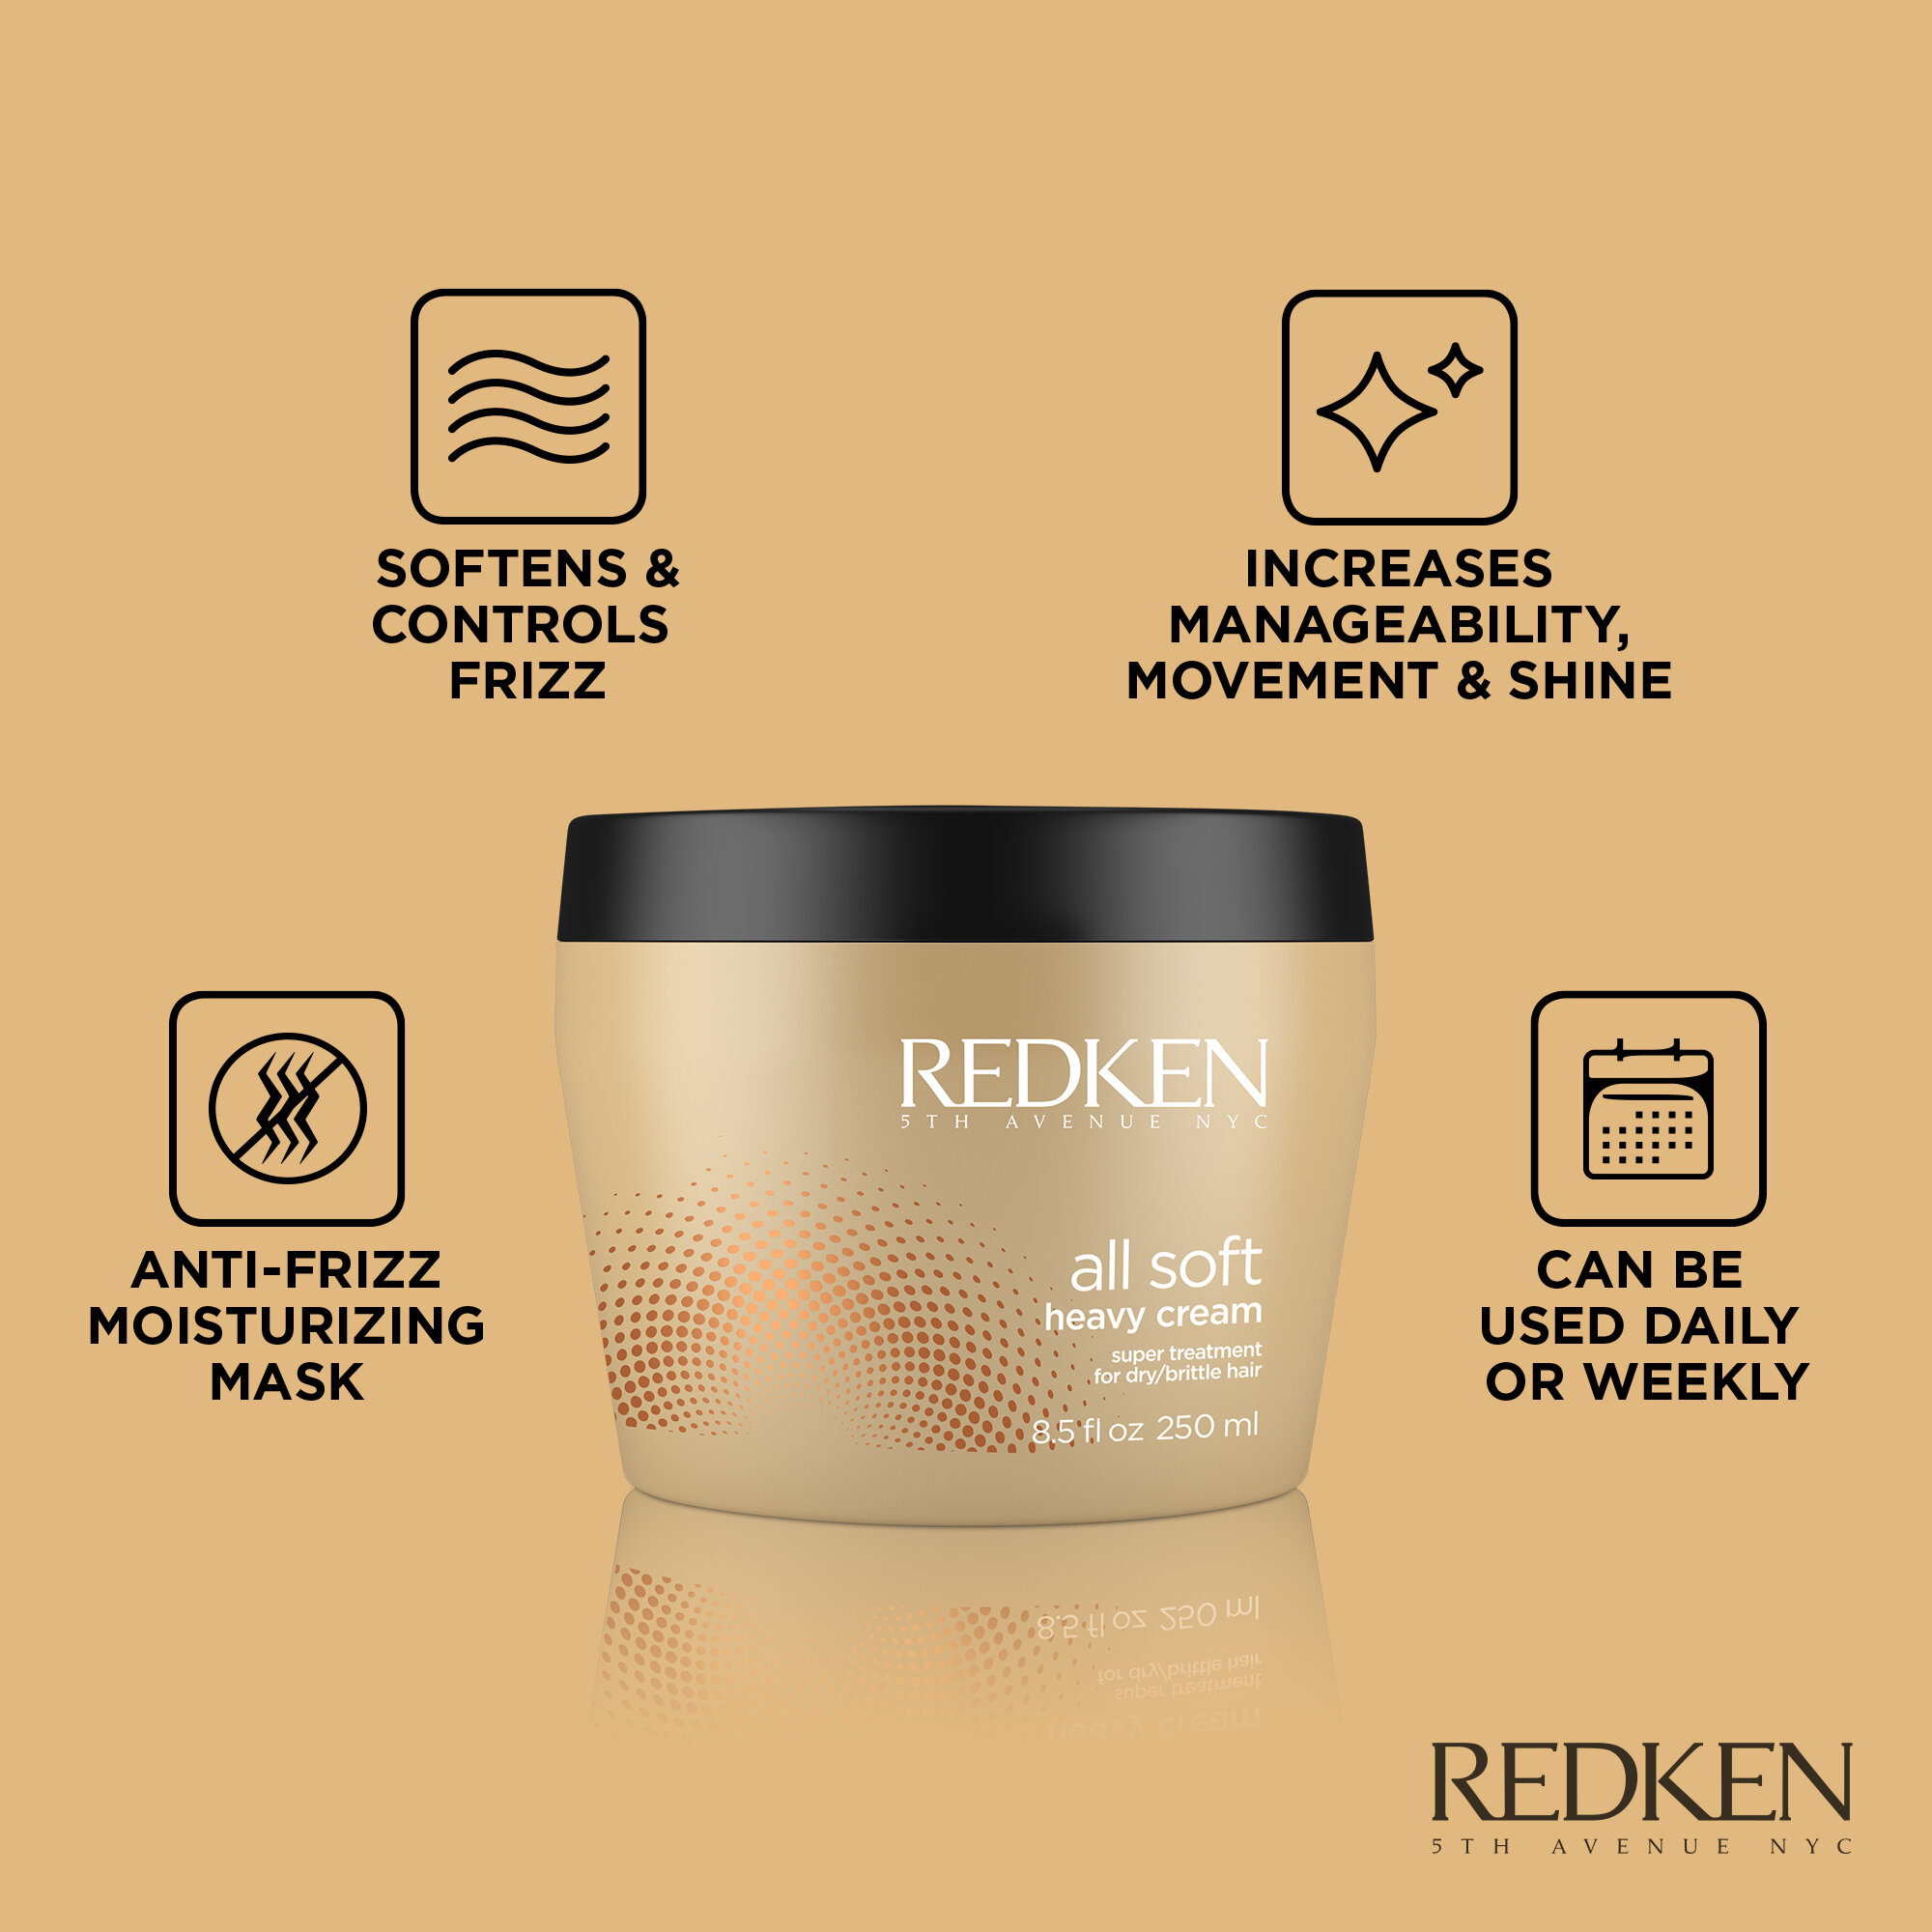 Redken-2020-EU-ERetail-All-Soft-Heavy-Cream-Benefits-2000x2000.jpg